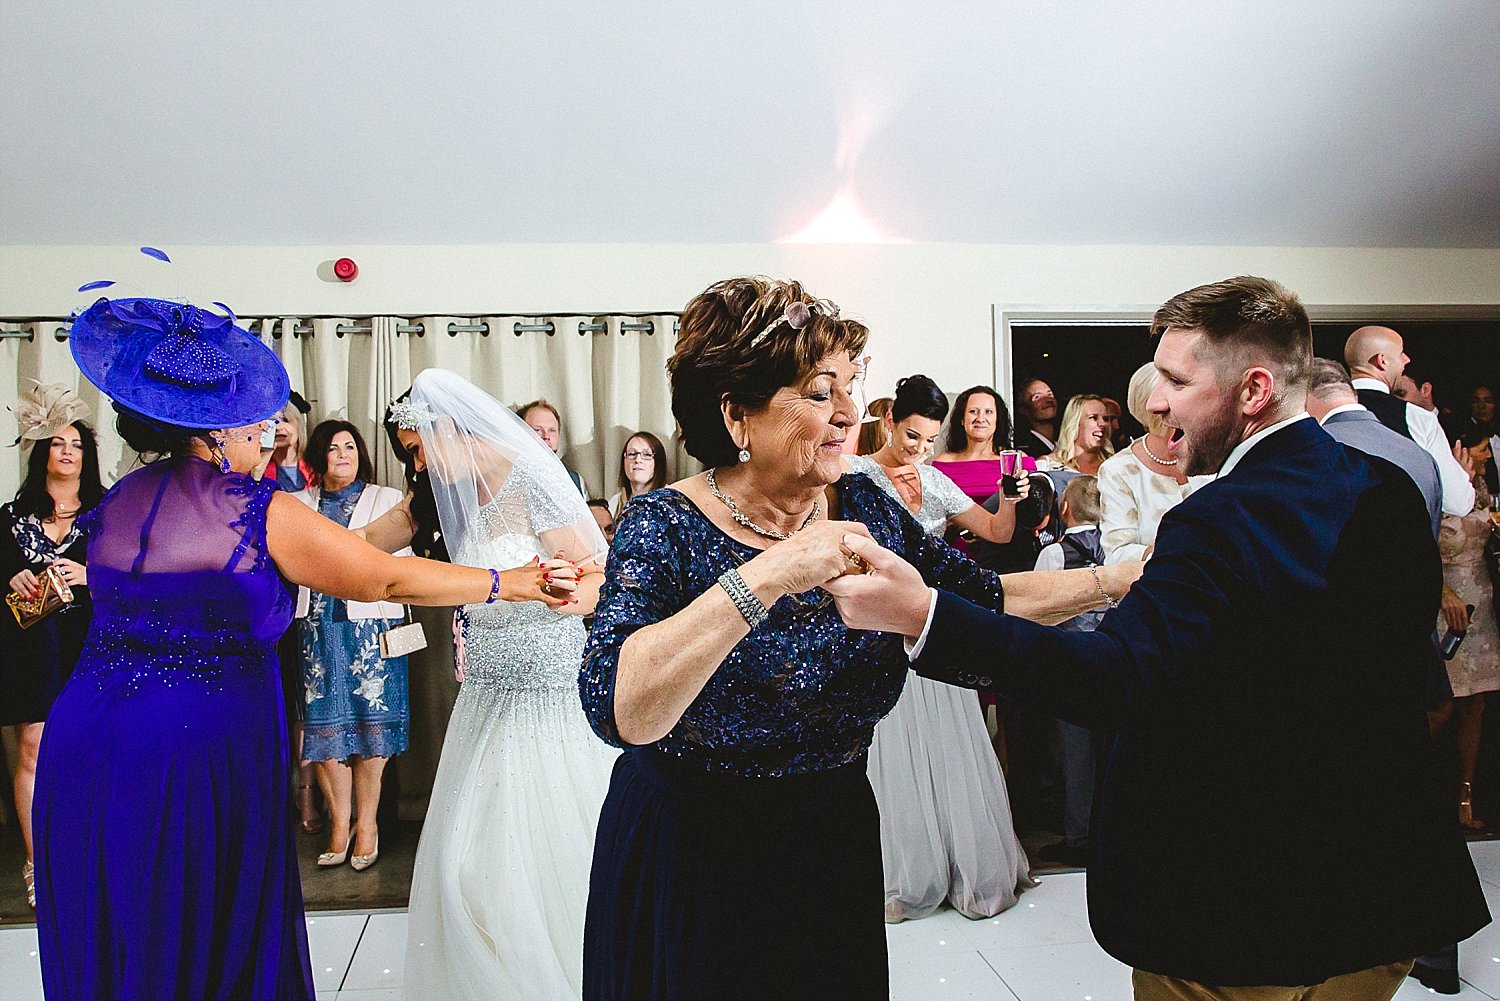 Houchins Wedding Photographer - Guests dancing